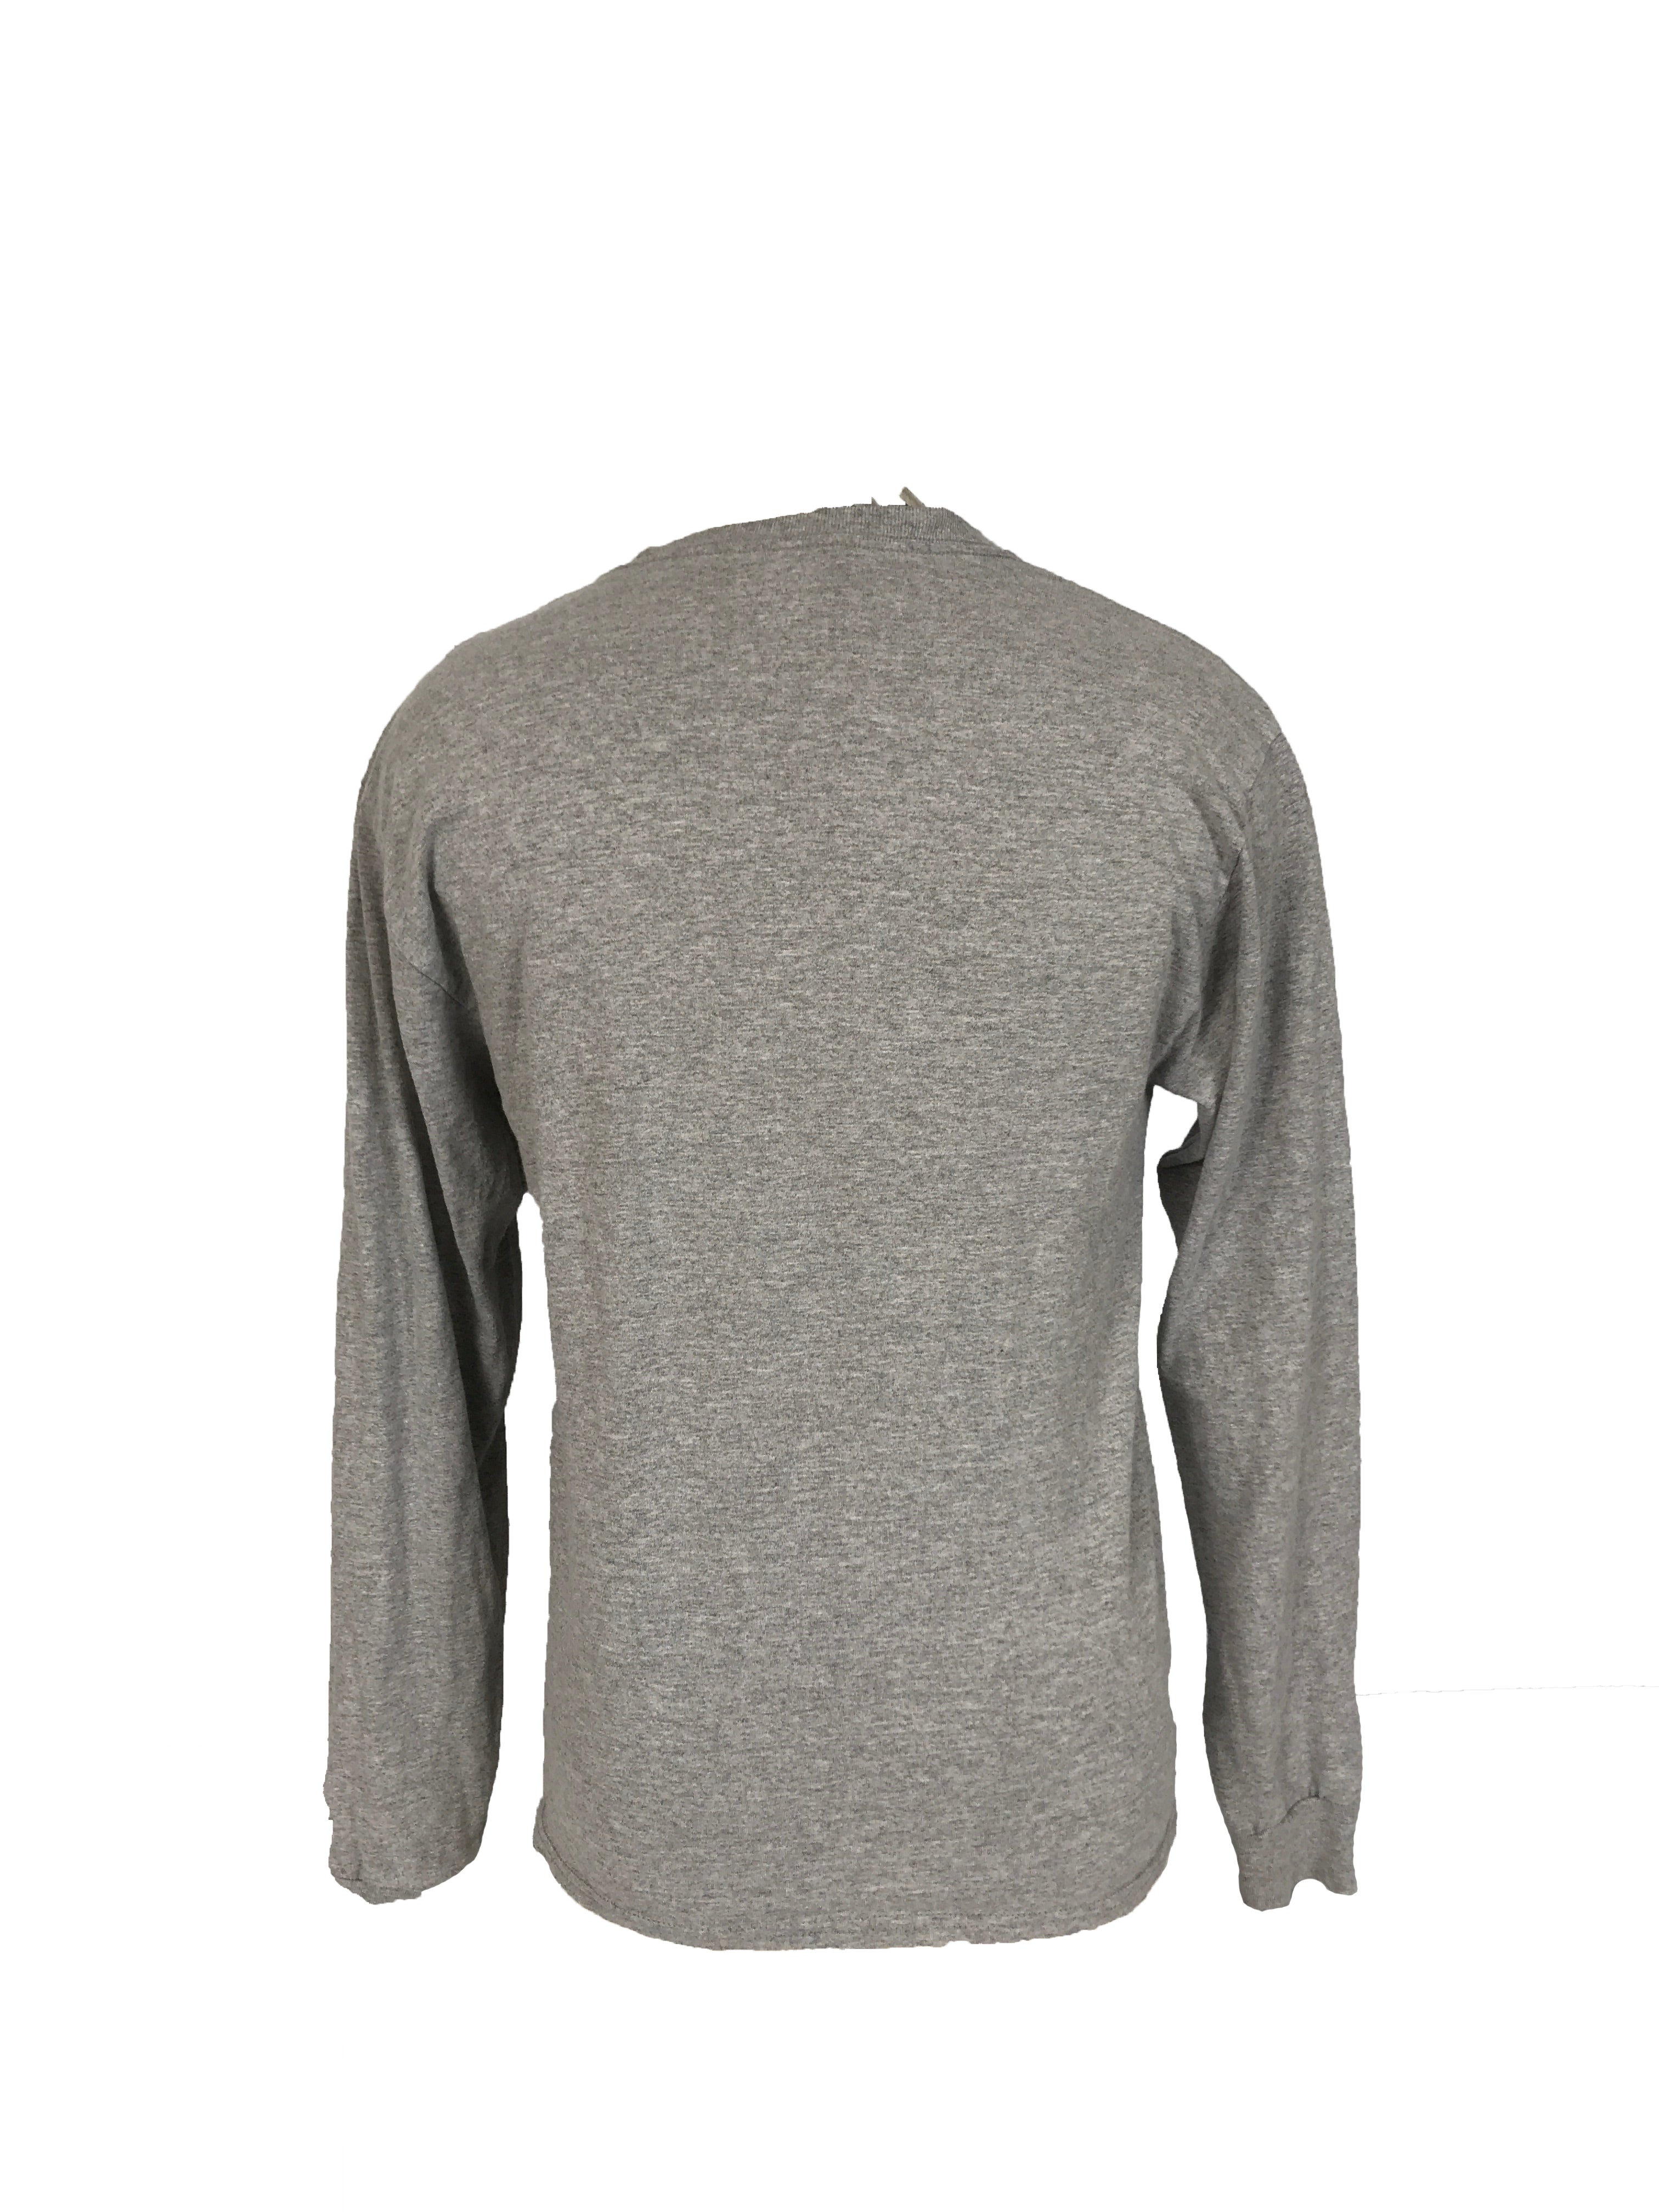 Champions Northwestern University Gray Long Sleeve Shirt Unisex M